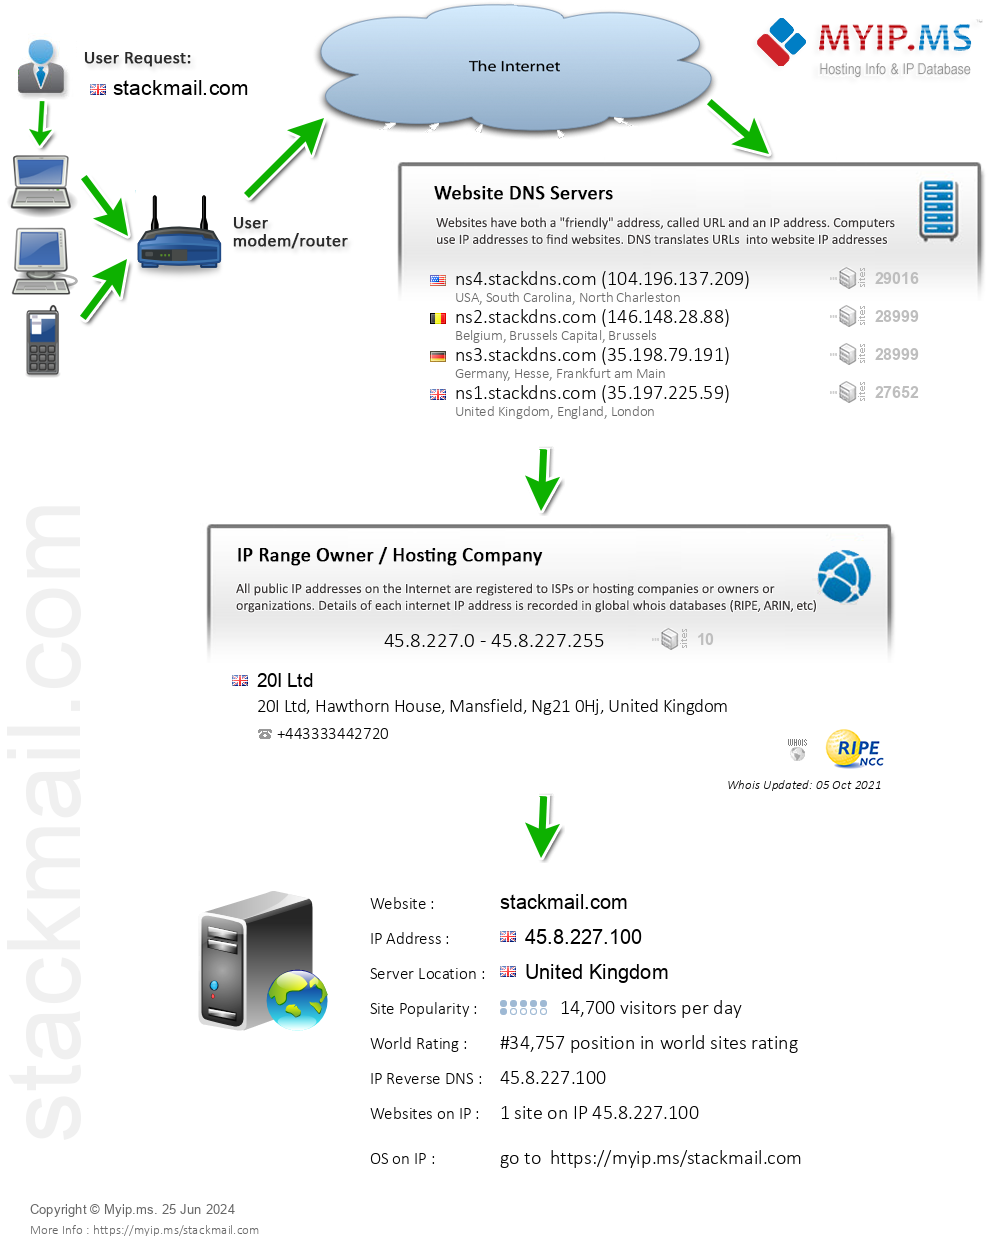 Stackmail.com - Website Hosting Visual IP Diagram